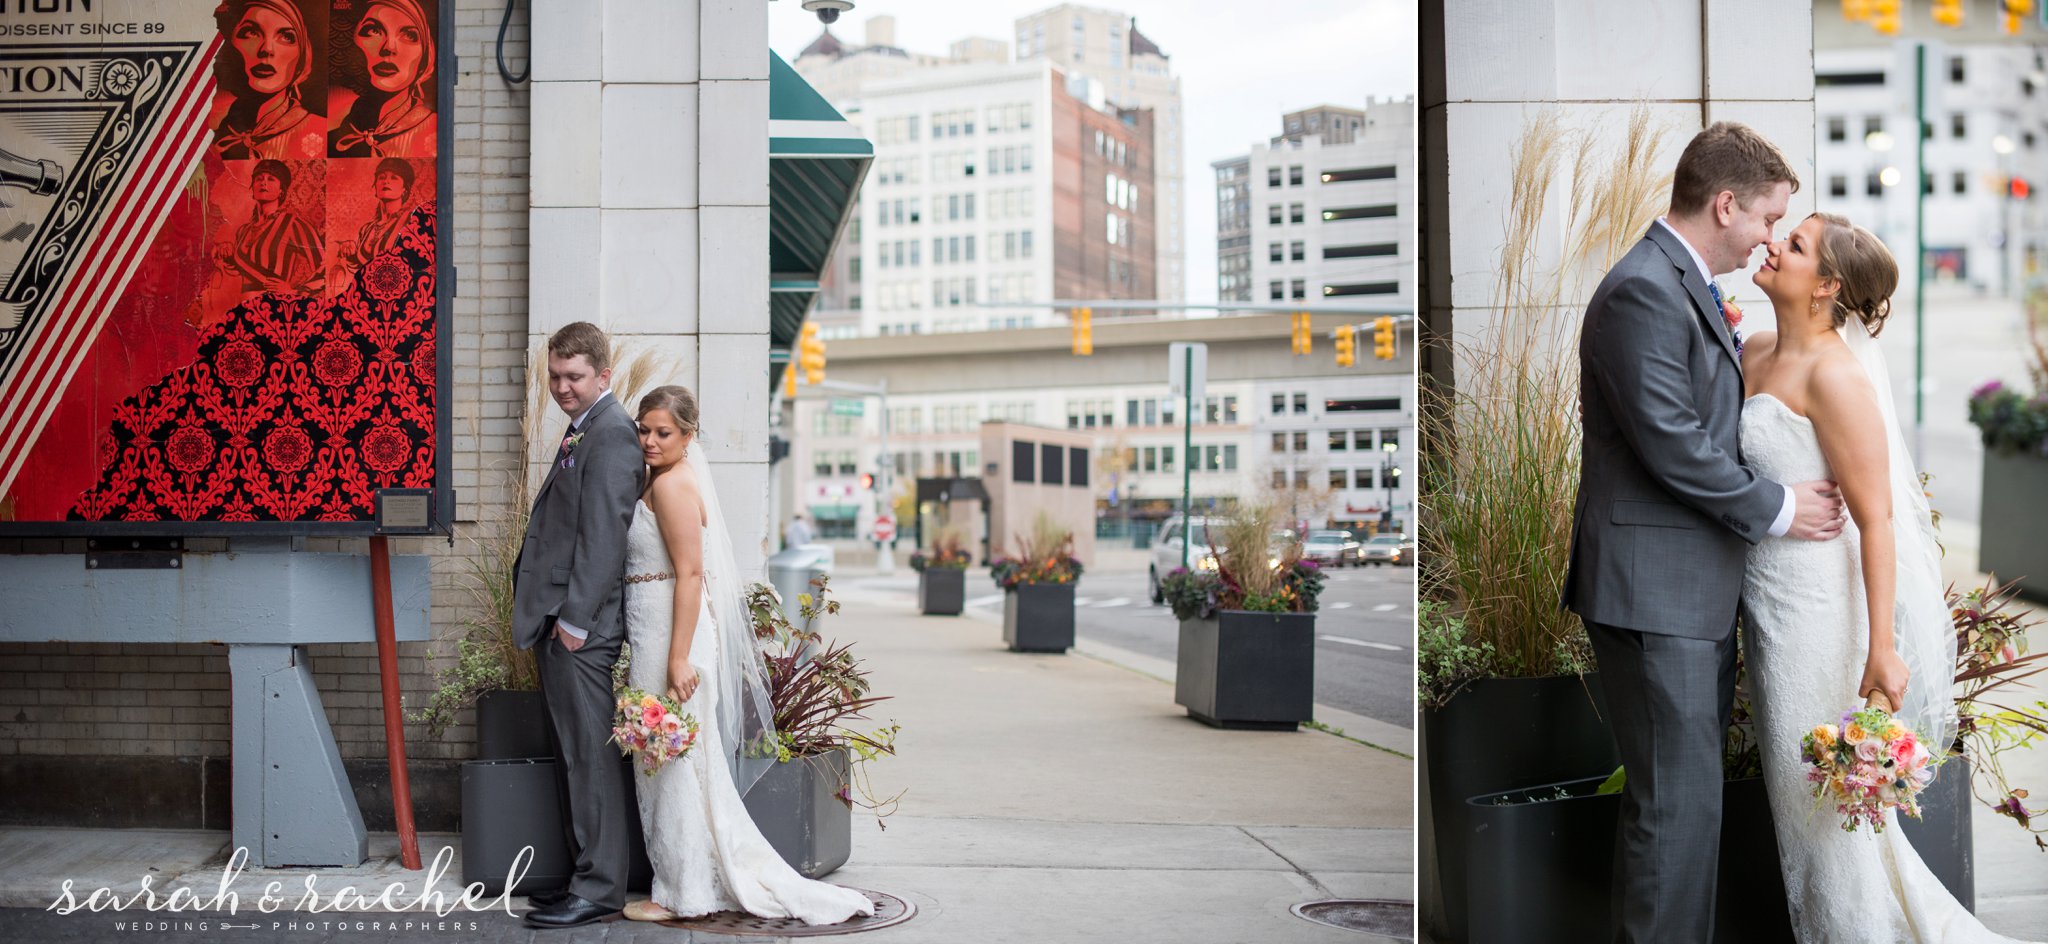 downtown alley Detroit Photography | Dearborn Inn Wedding | Detroit Michigan | Sarah and Rachel Wedding Photographers